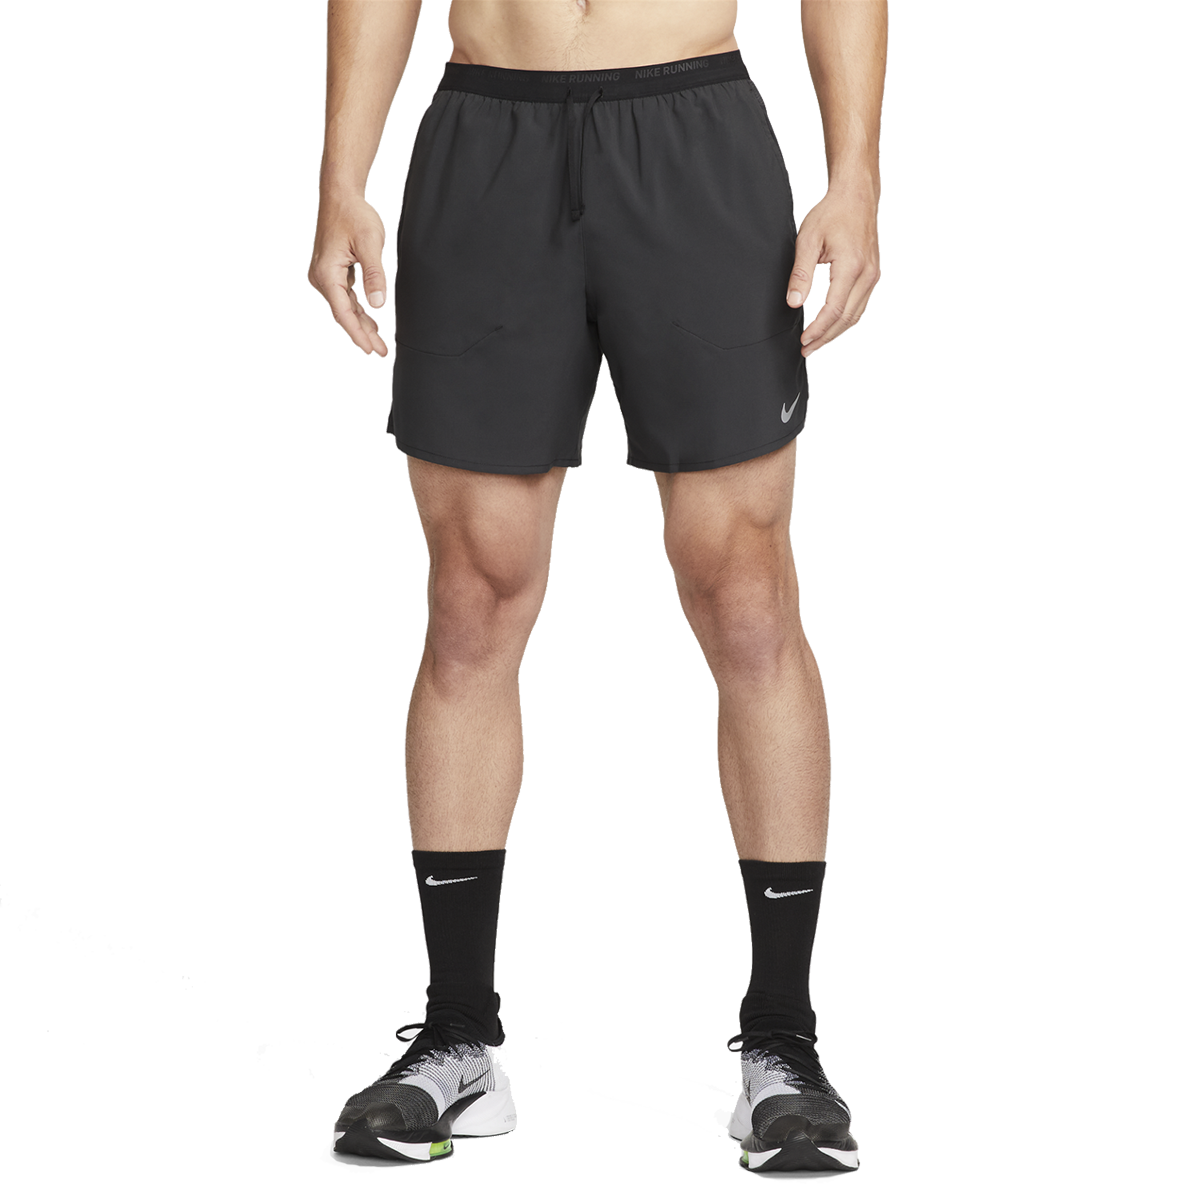 Nike Dri-FIT Stride Short, , large image number null